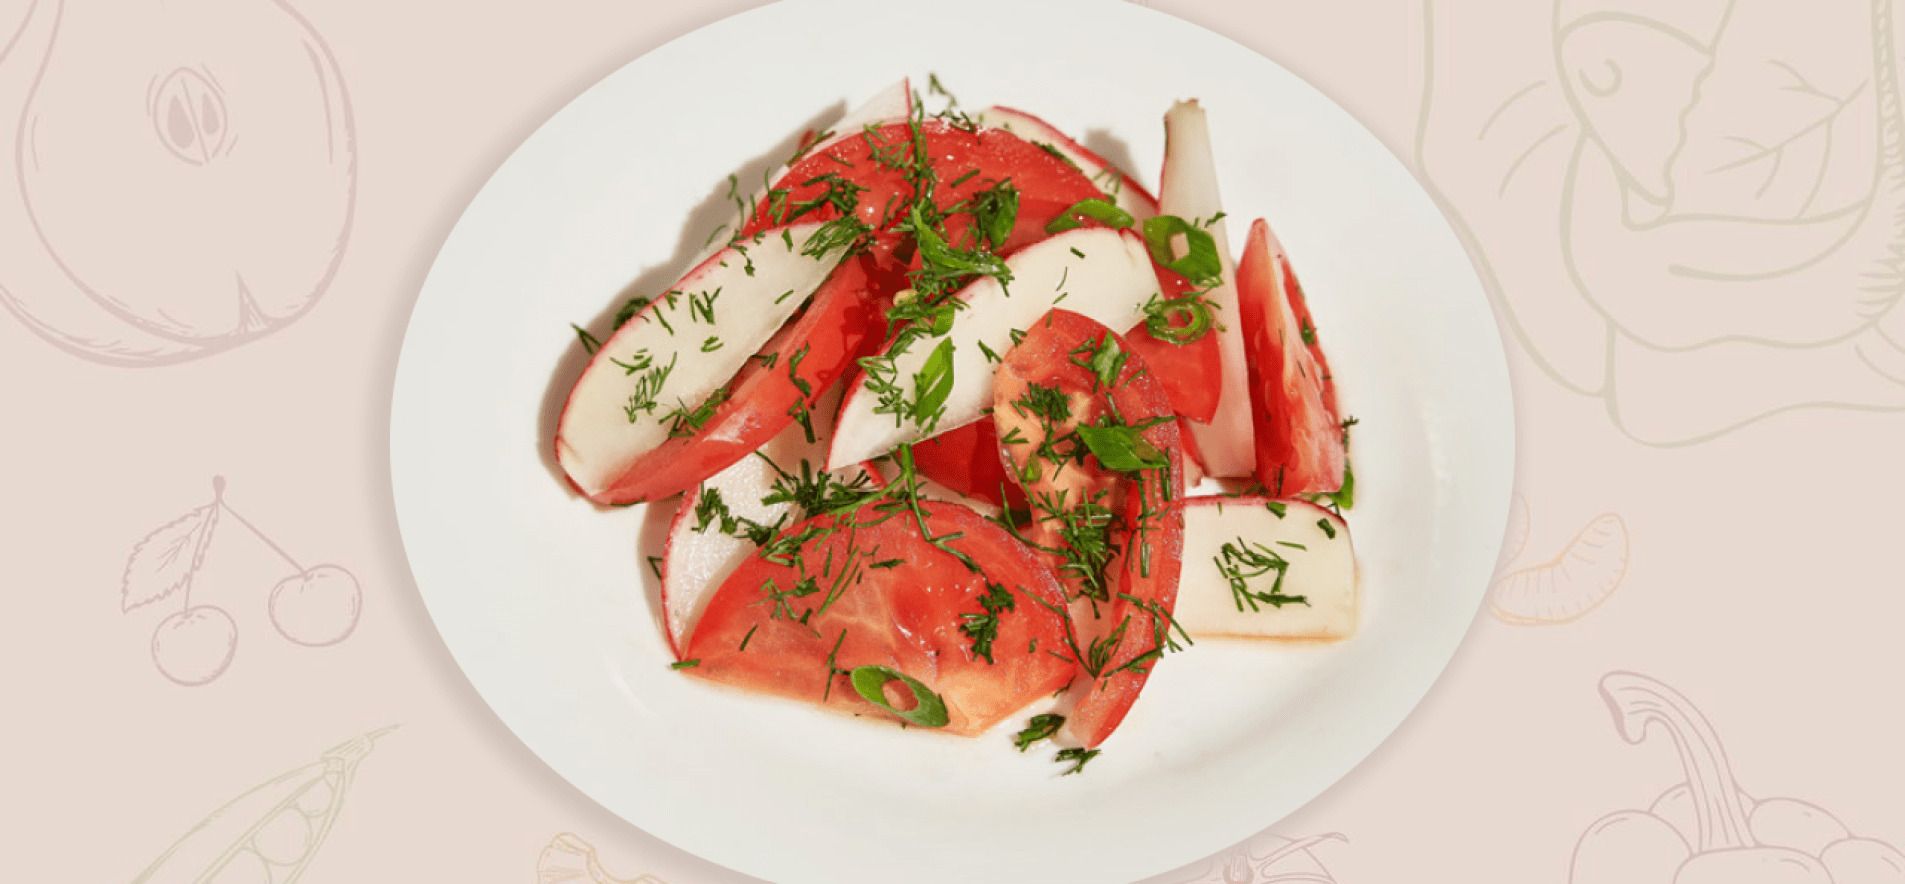 Салат з томатами та редискою - приготуйте просто та швидко - покроковий рецепт - Новини Смачно